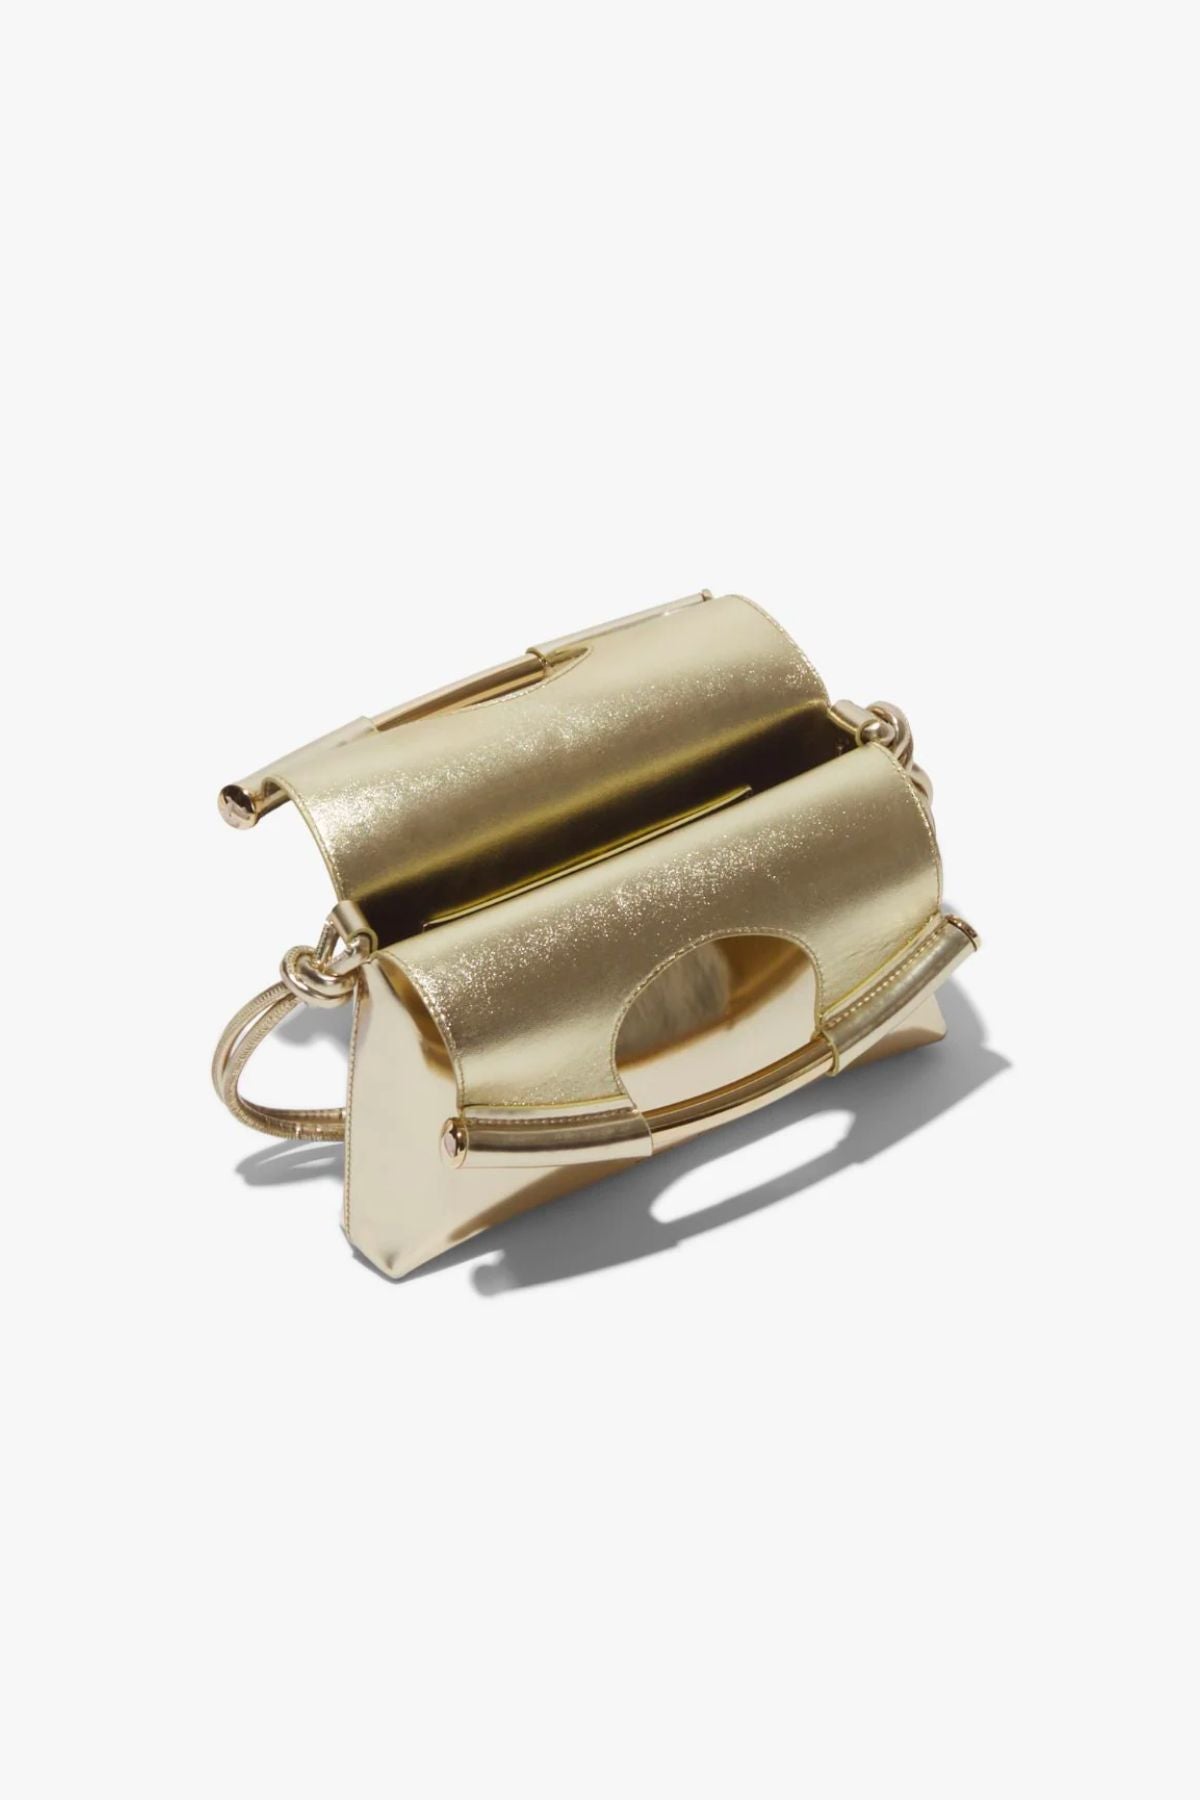 Proenza Schouler Small Bar Tote Bag - Light Gold